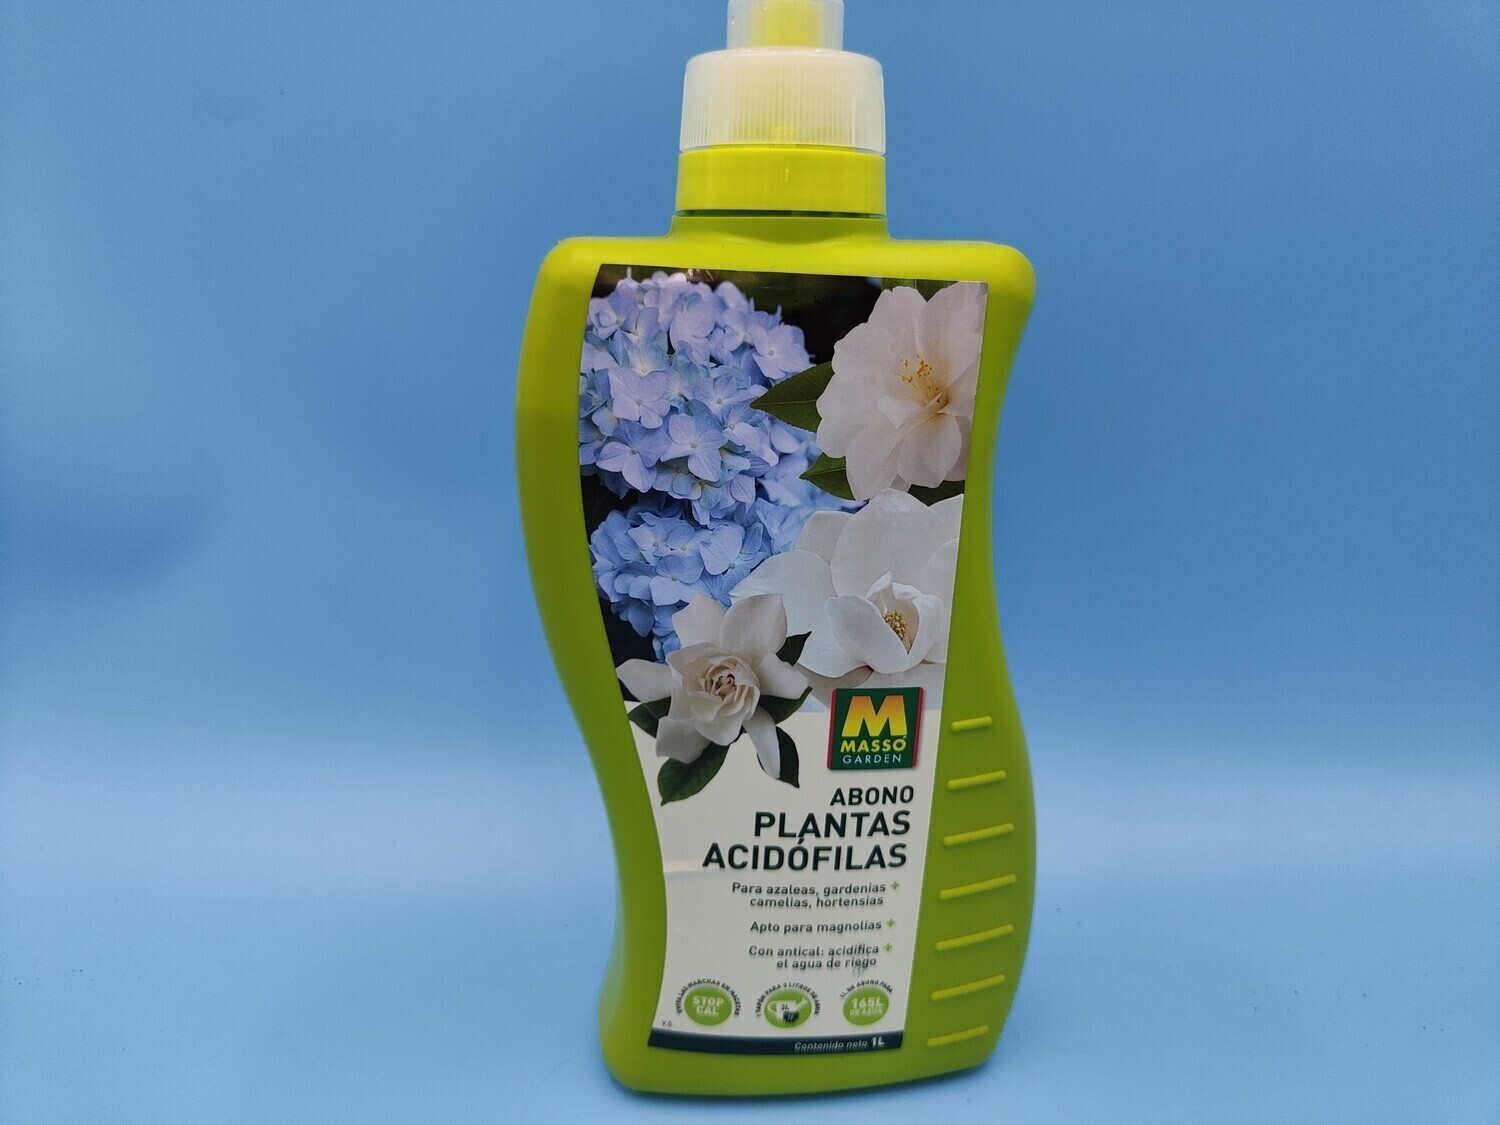 "AmaPlant 3 envases Abono Plantas Acidofilas" liquido para azaleas, gardenias, camelias, hortensias, apto para magnolias 3x1 litros - ENVIO INCLUIDO